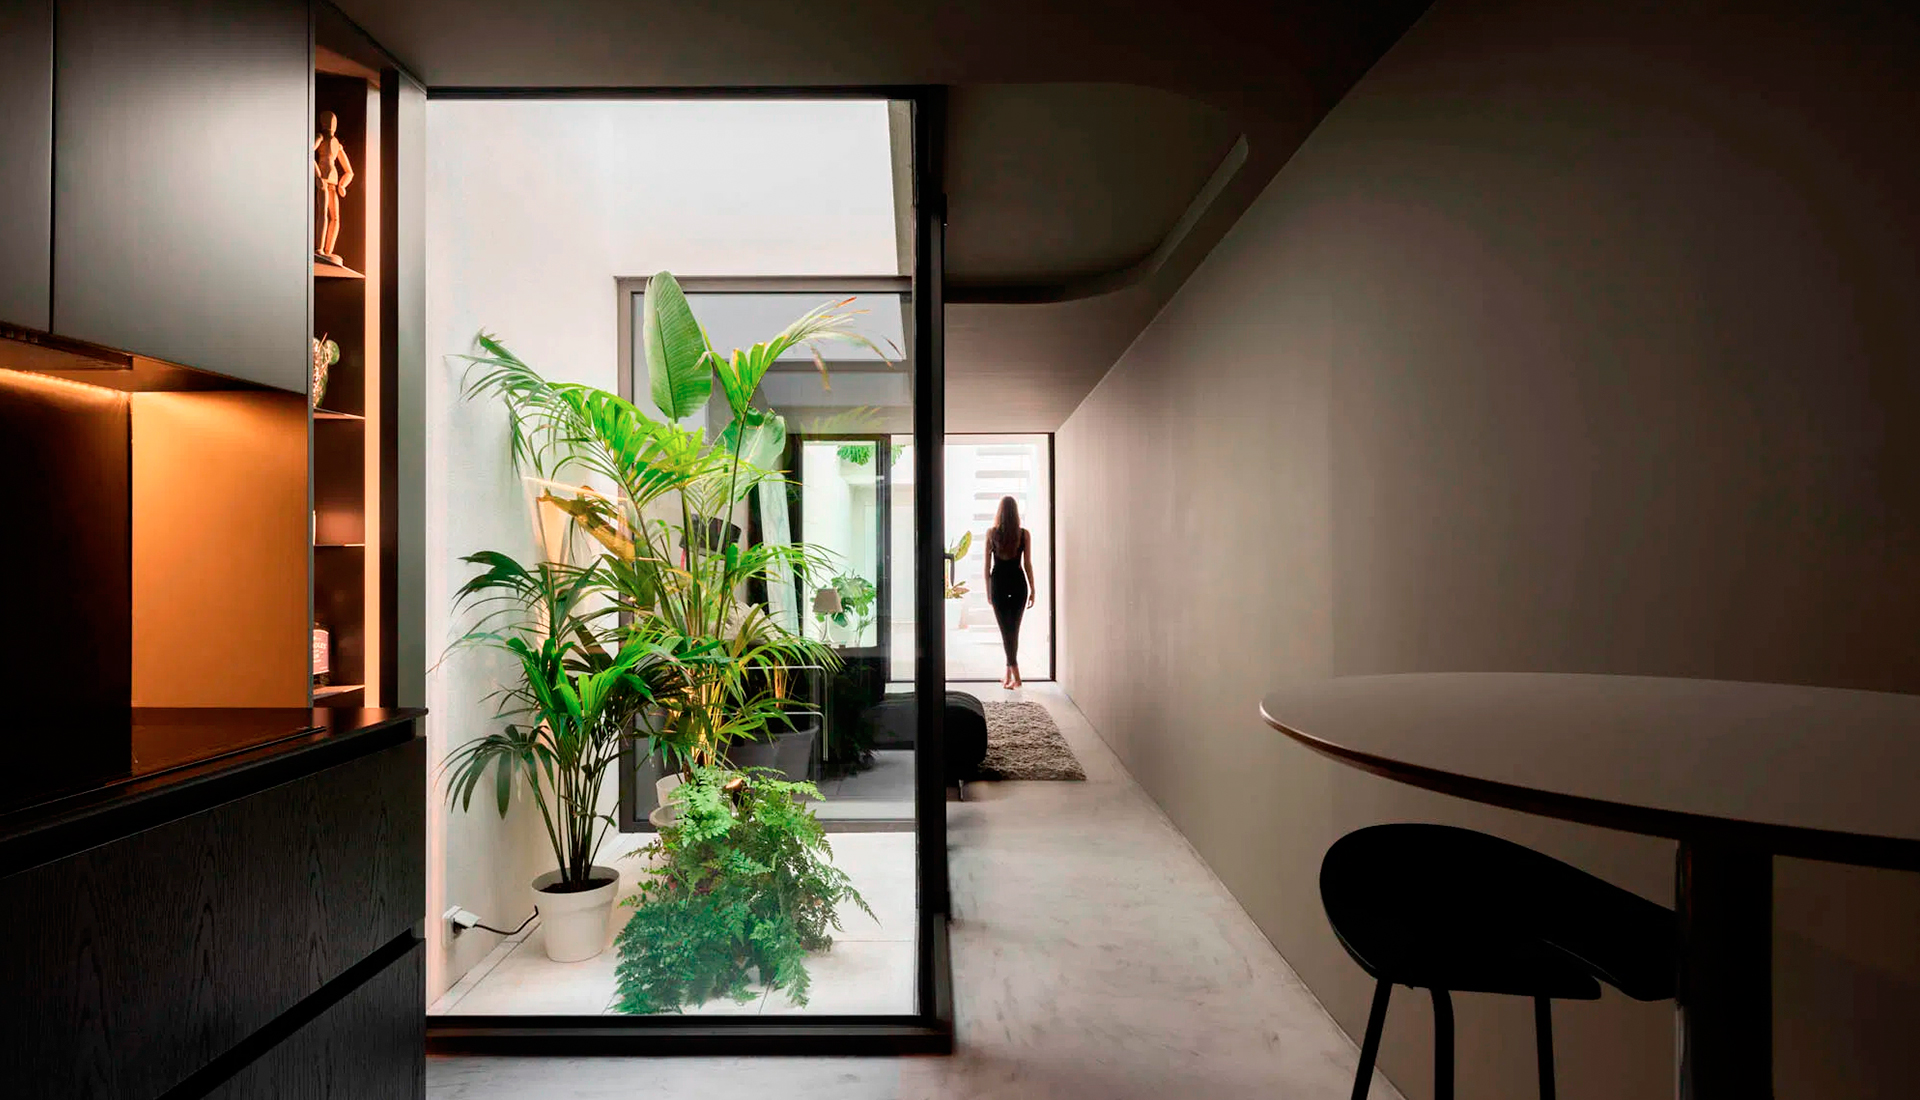 Paulo Martins Arquitectura: узкий дом с патио в Португалии